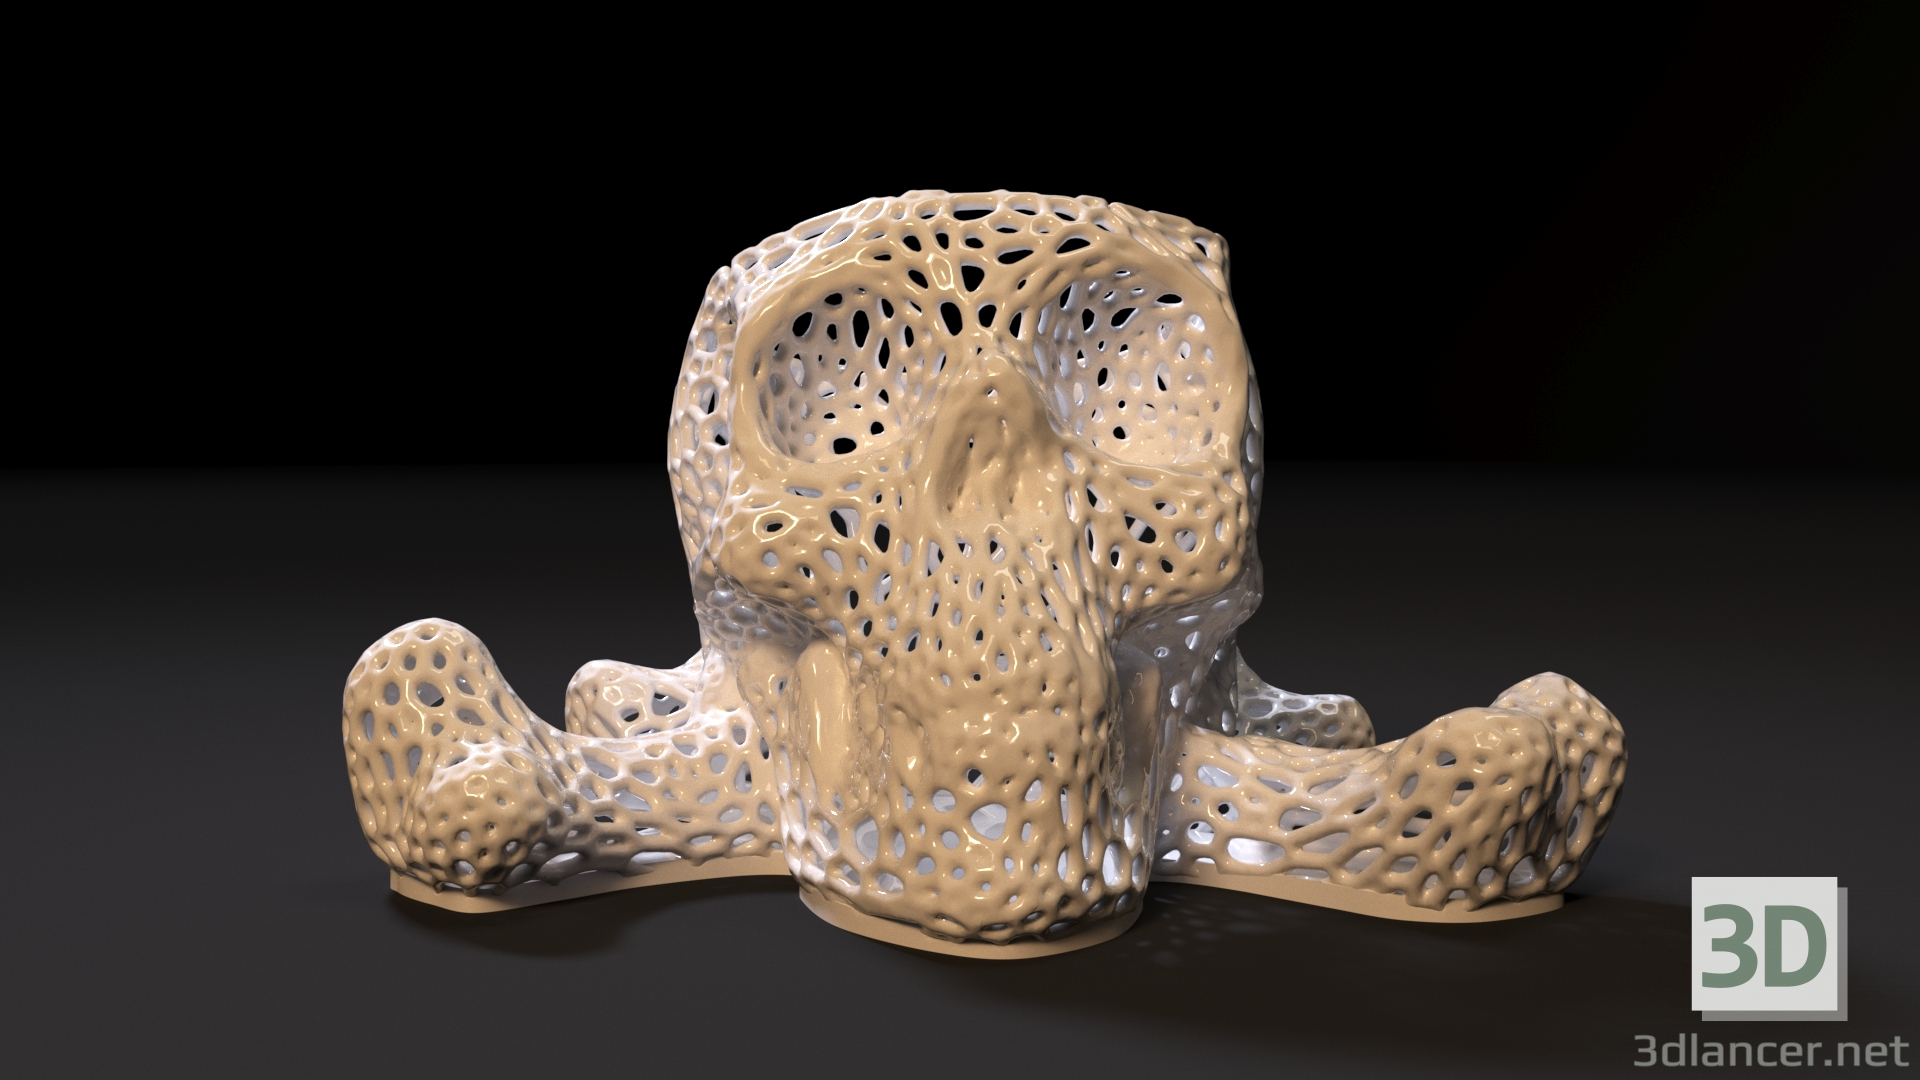 3d Pirate skull model buy - render